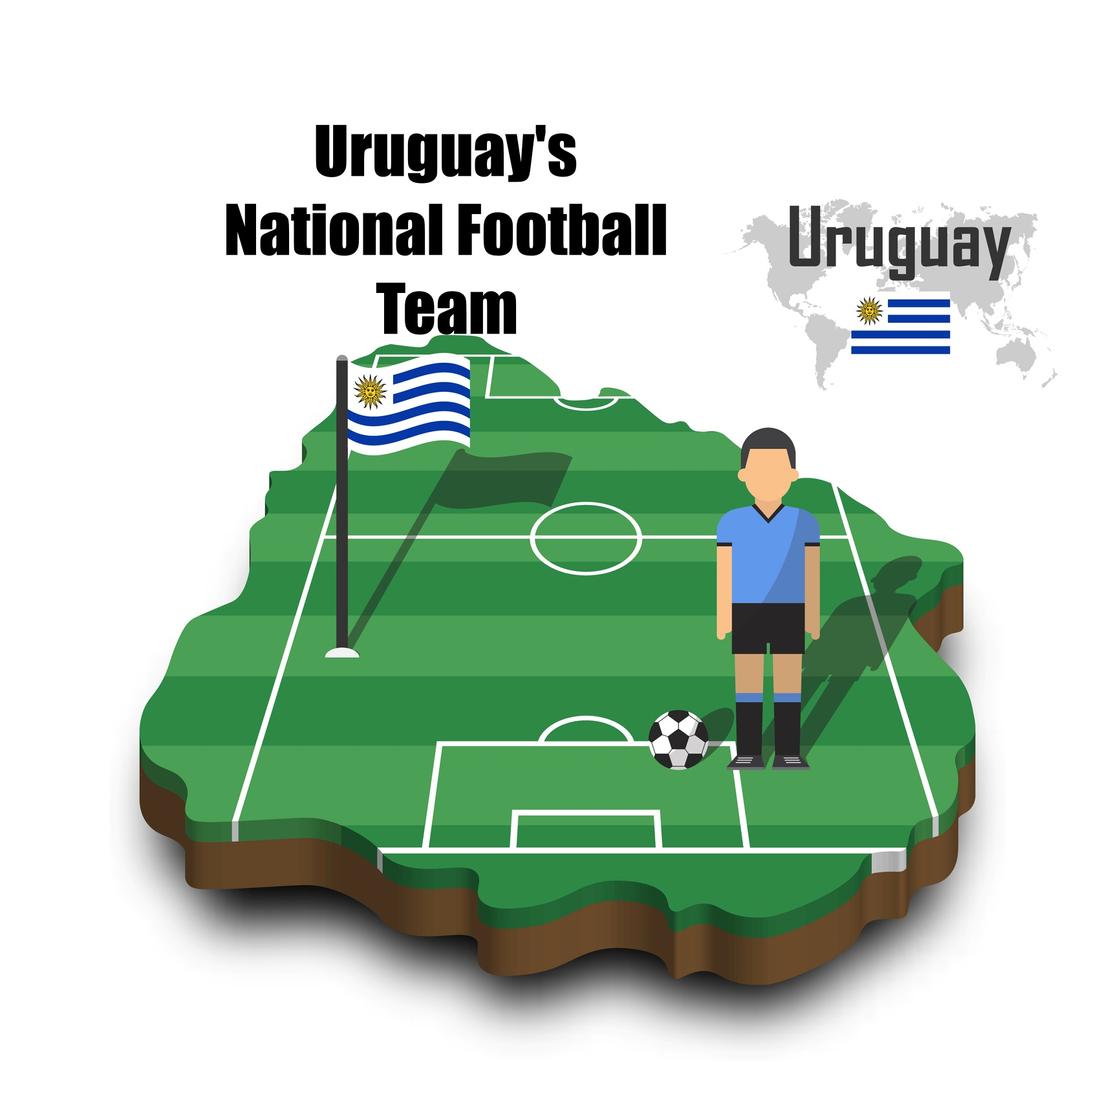 Uruguay’s national football team's